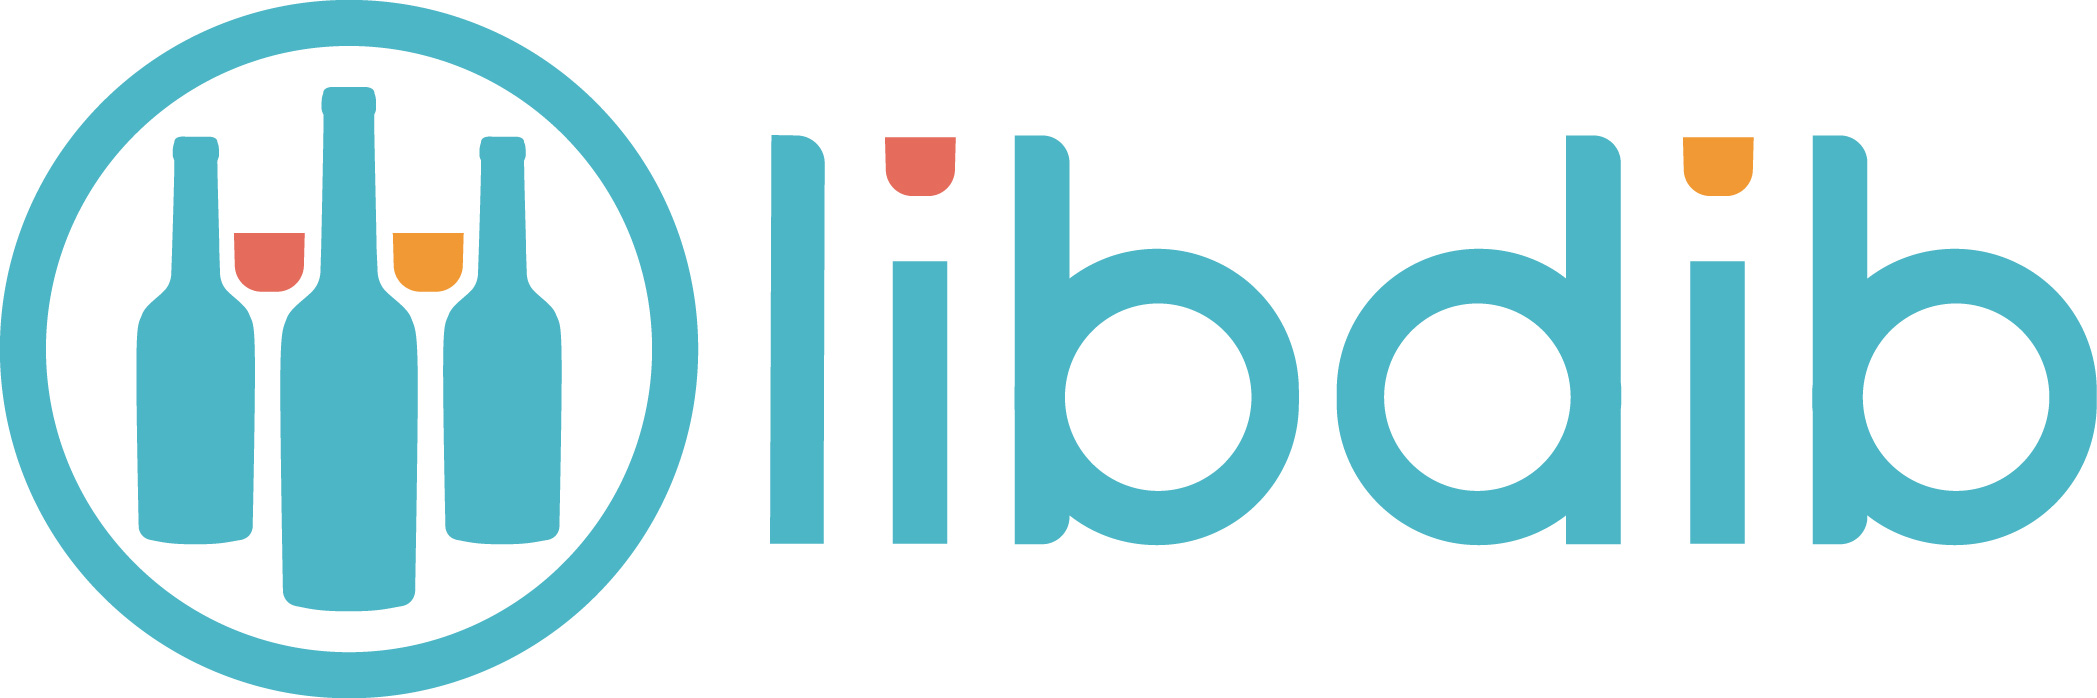 Liberation Distribution (LibDib) is the first web-based three-tier alcohol distribution platform.